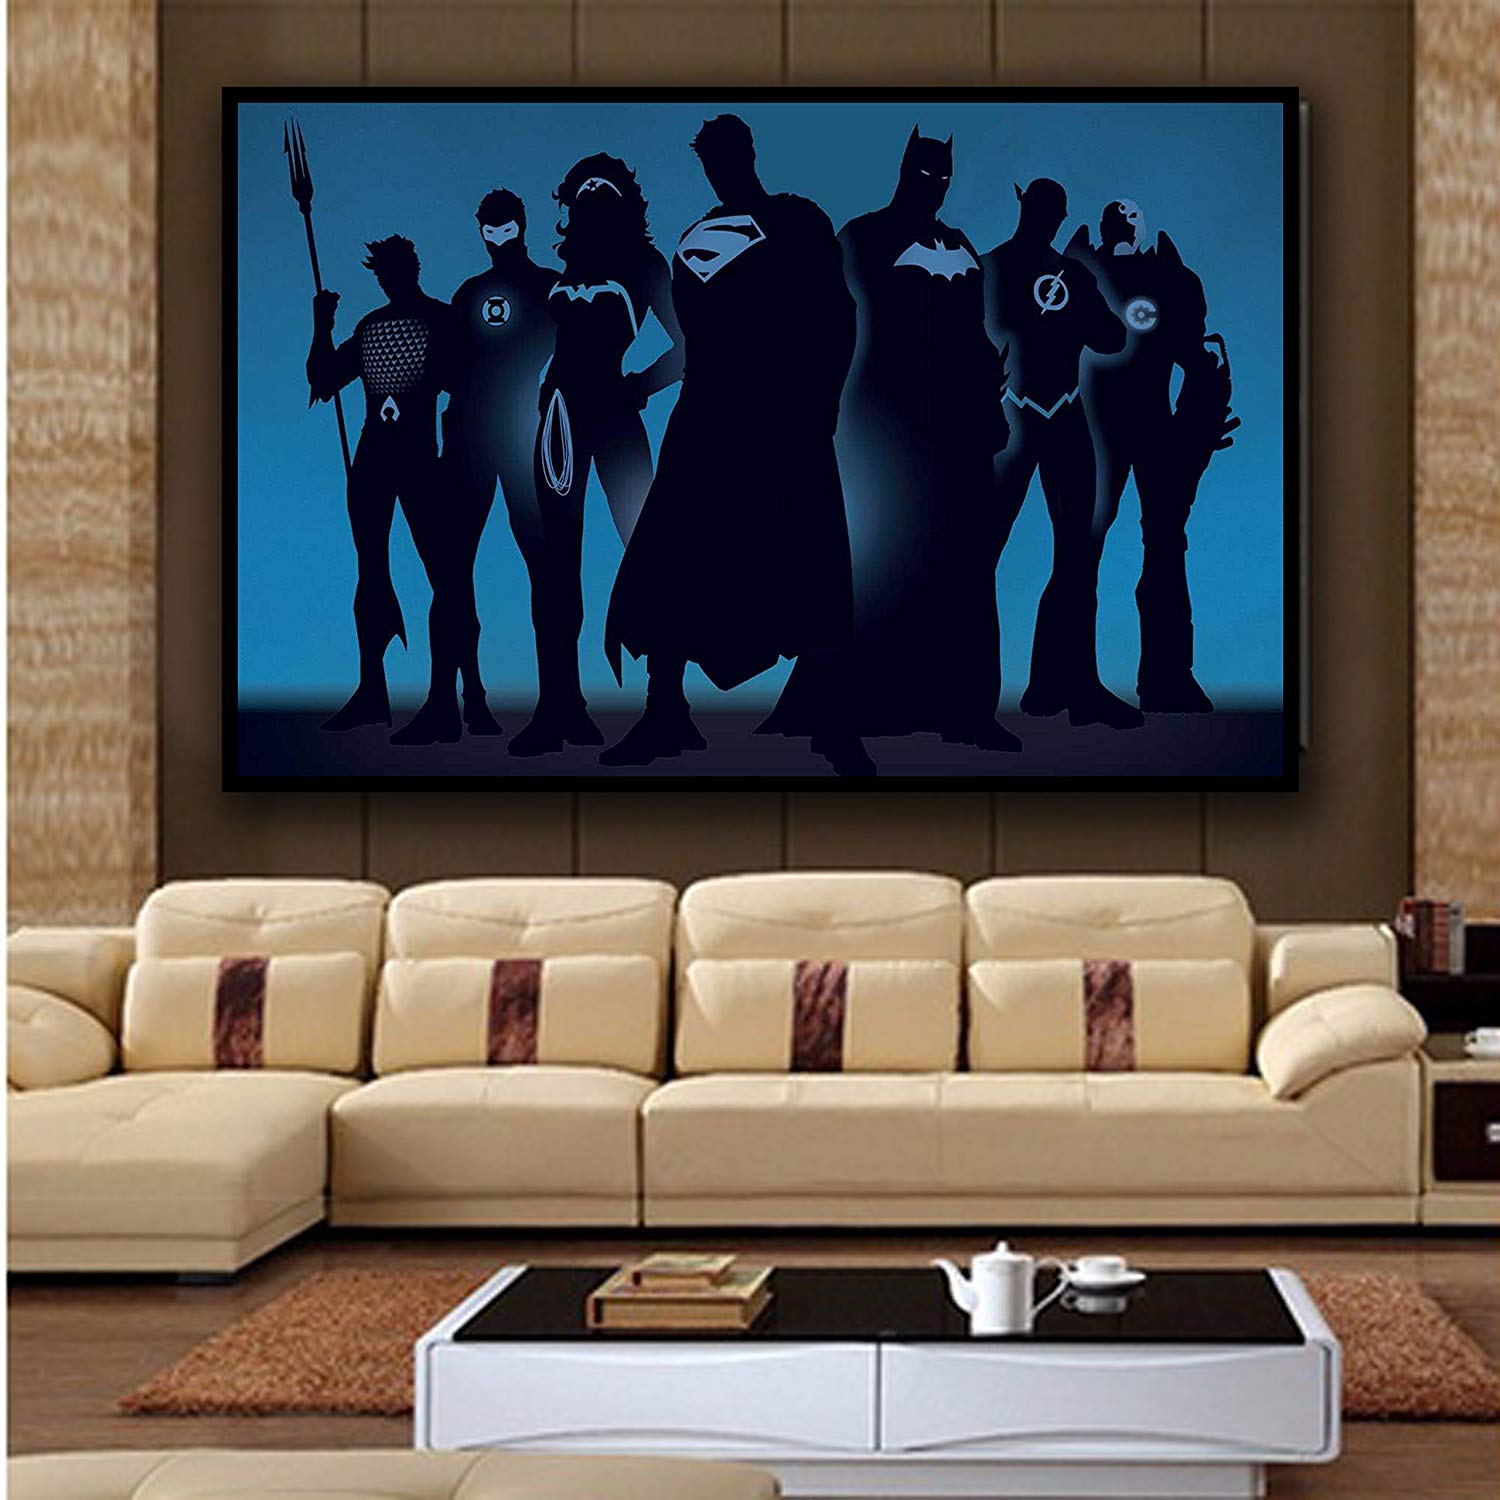 Justice League - HD Wallpaper 